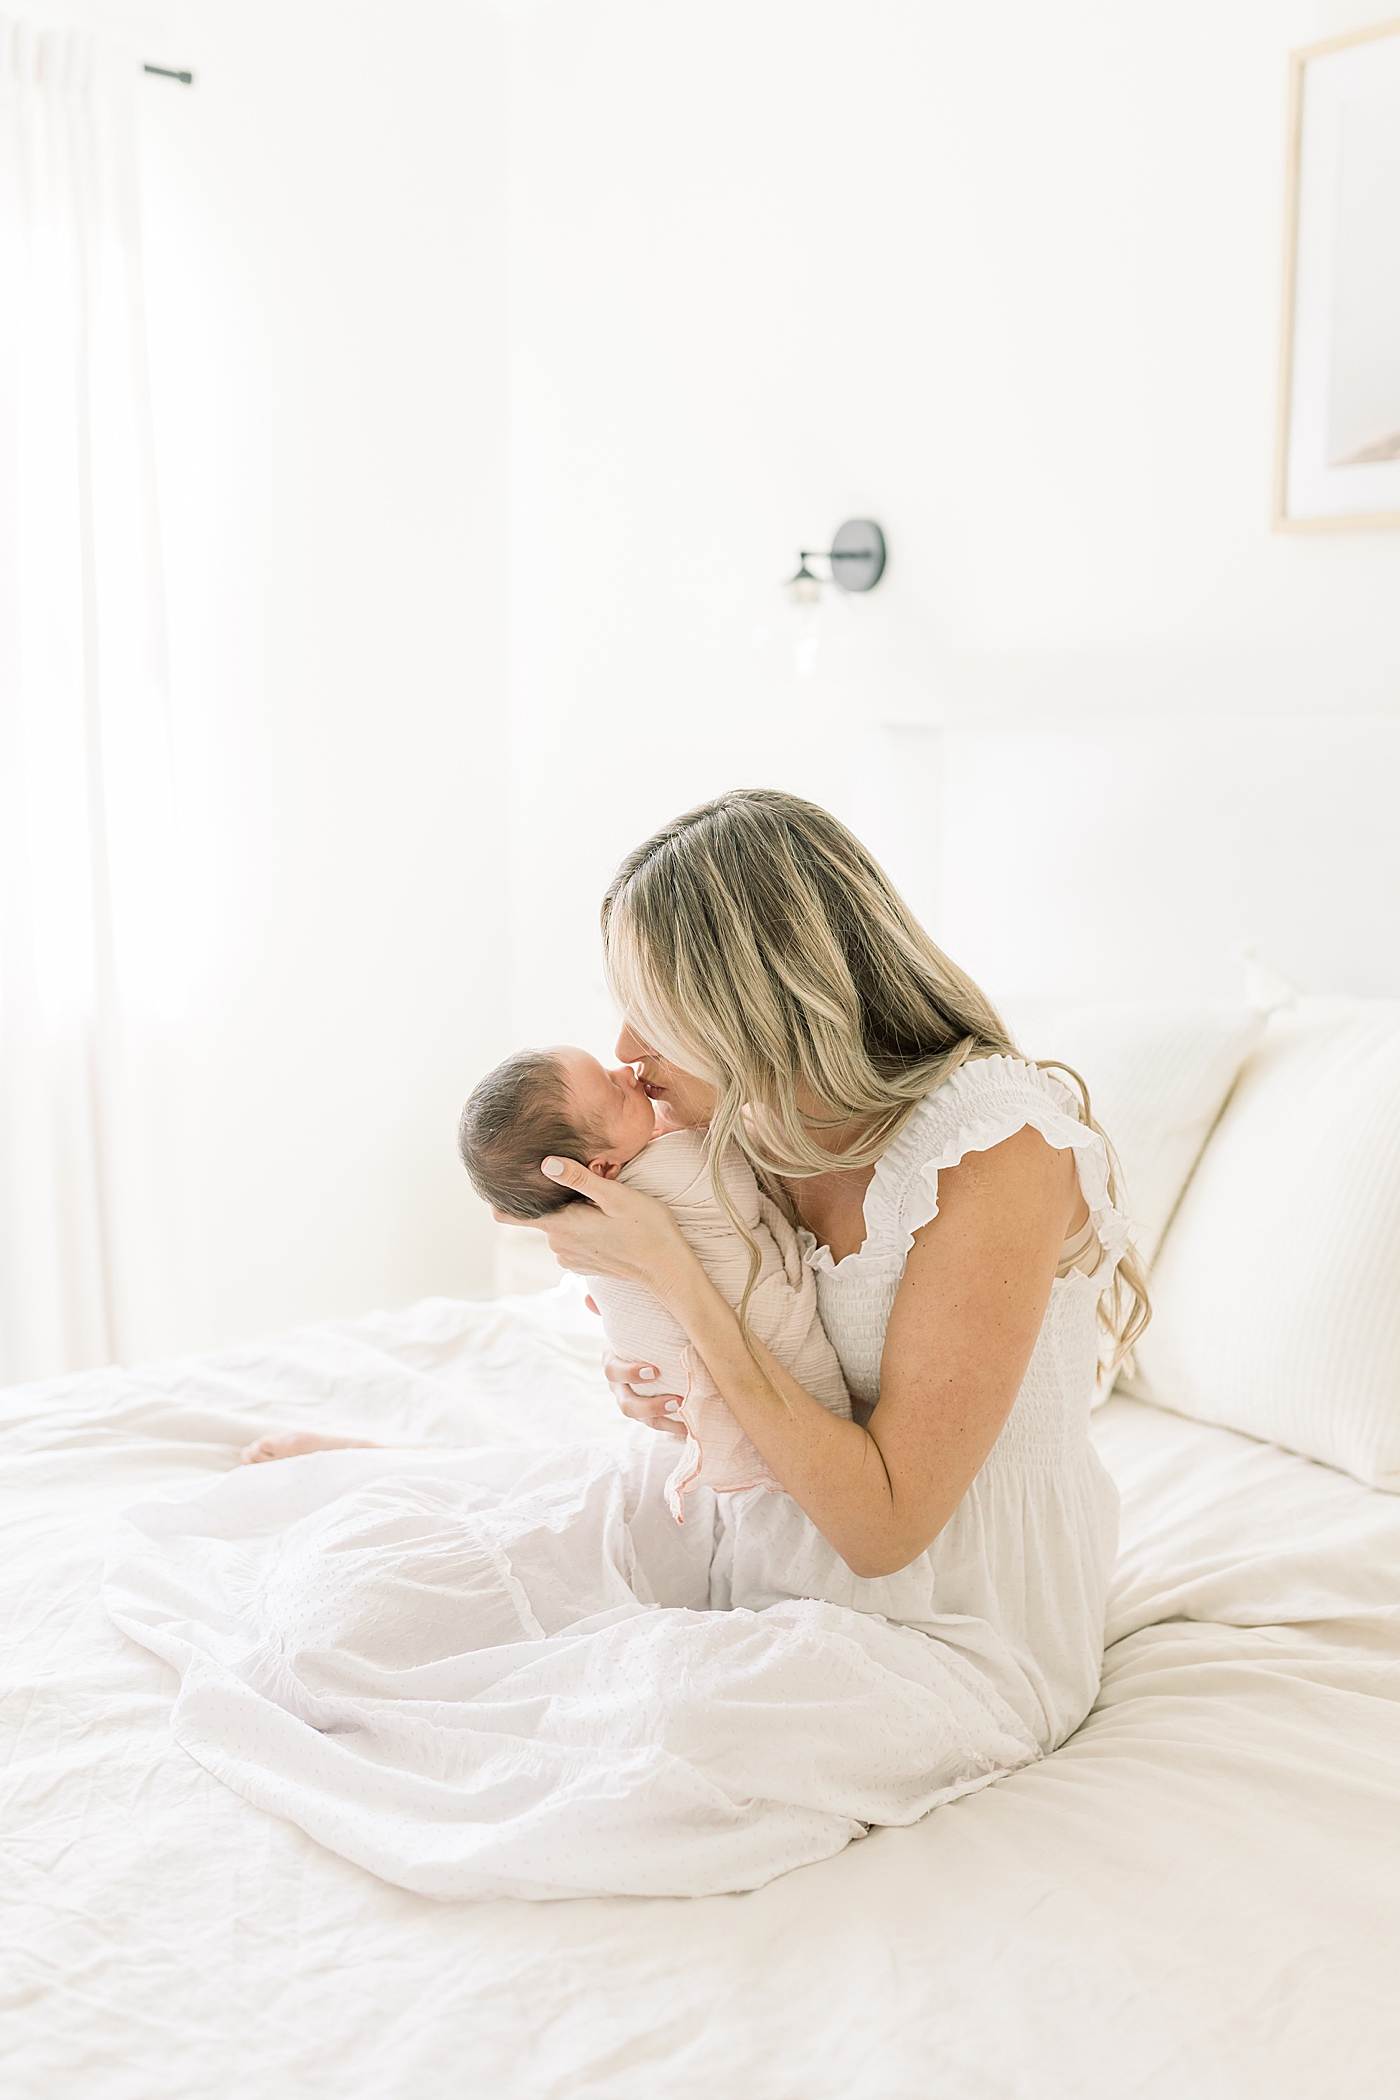 Mom kissing her newborn baby girl | Image by Caitlyn Motycka